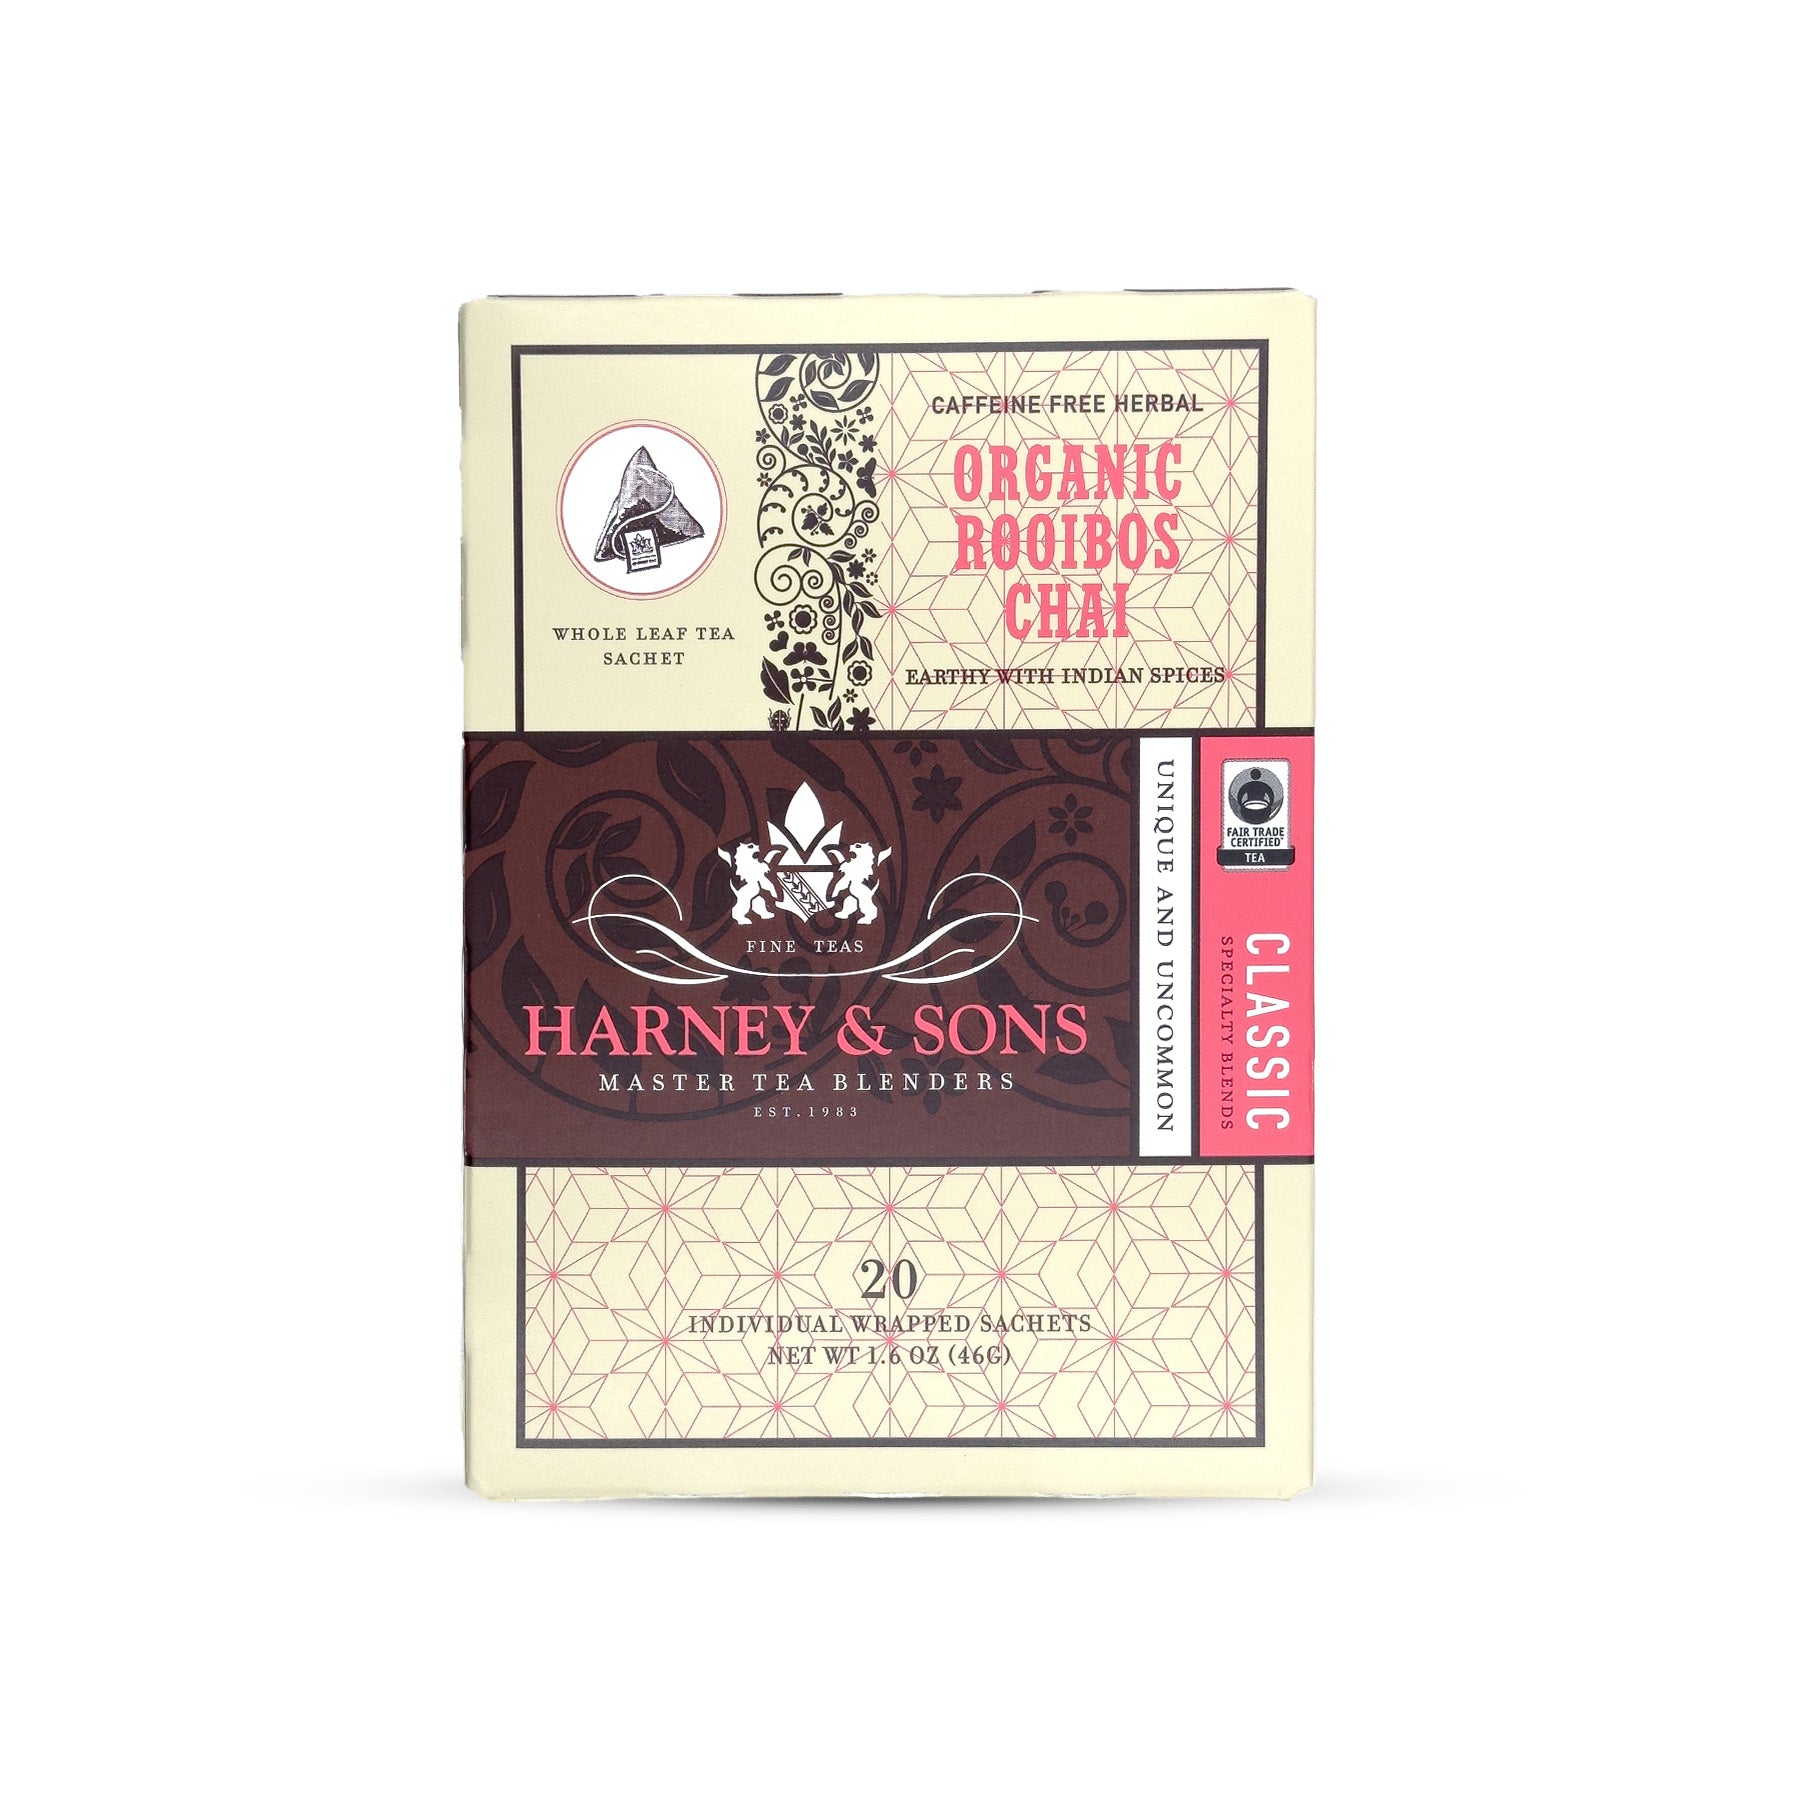 Organic Rooibos Chai, Box of 20 Individually Wrapped Sachets - Harney & Sons Fine Teas Europe